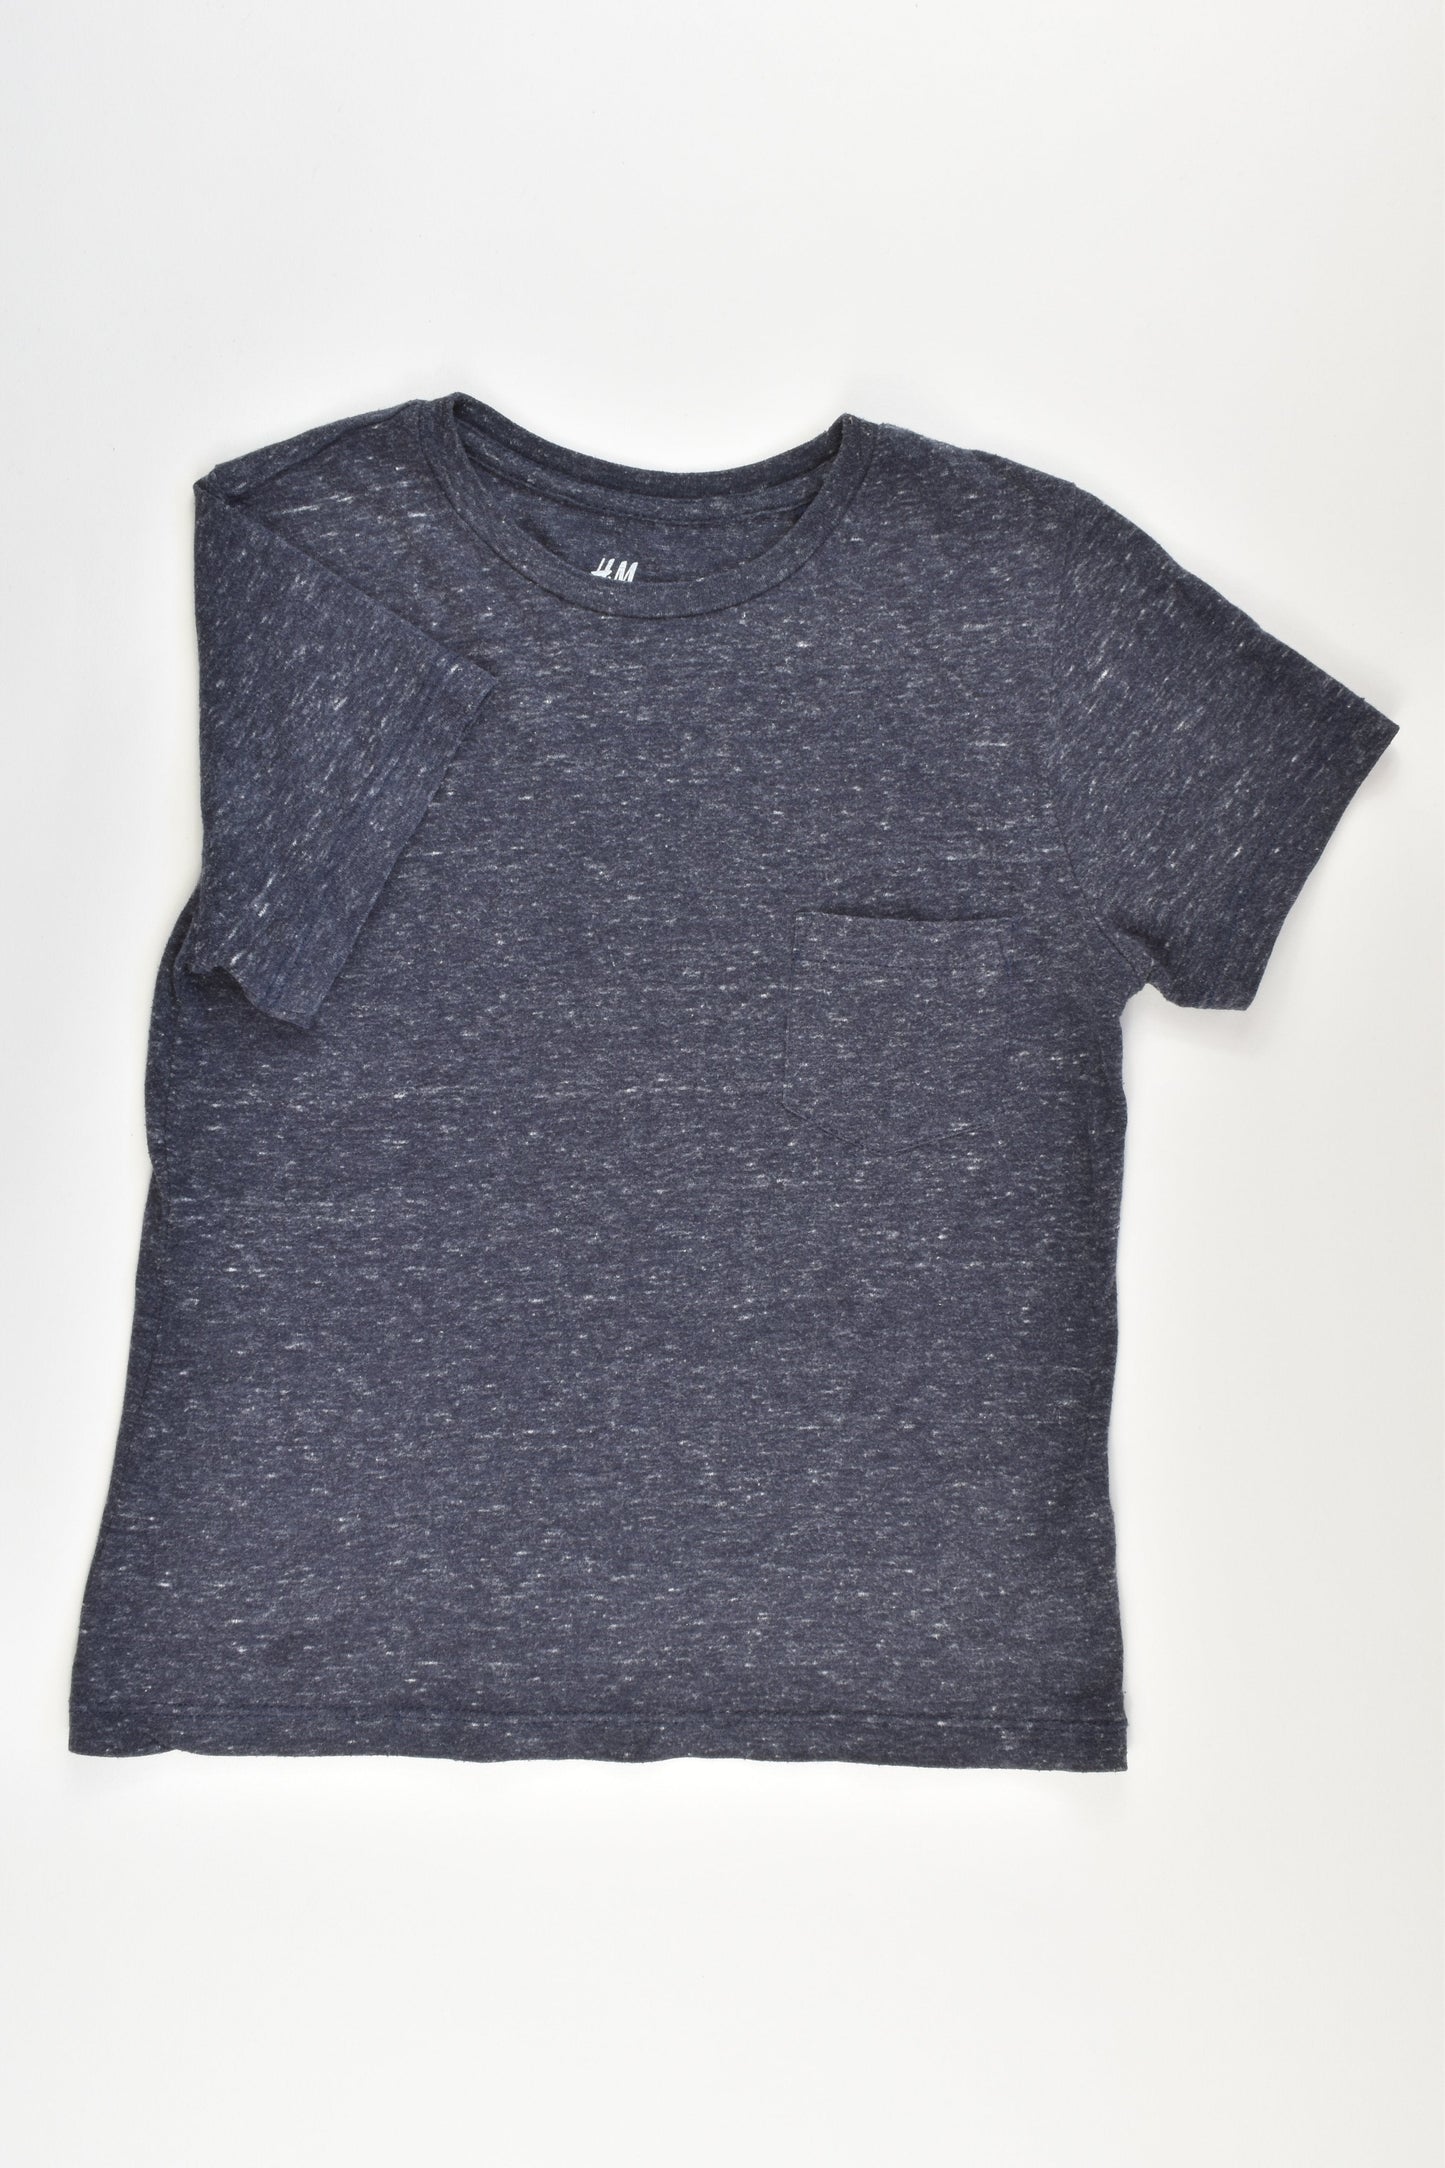 H&M Size 5-6 T-shirt